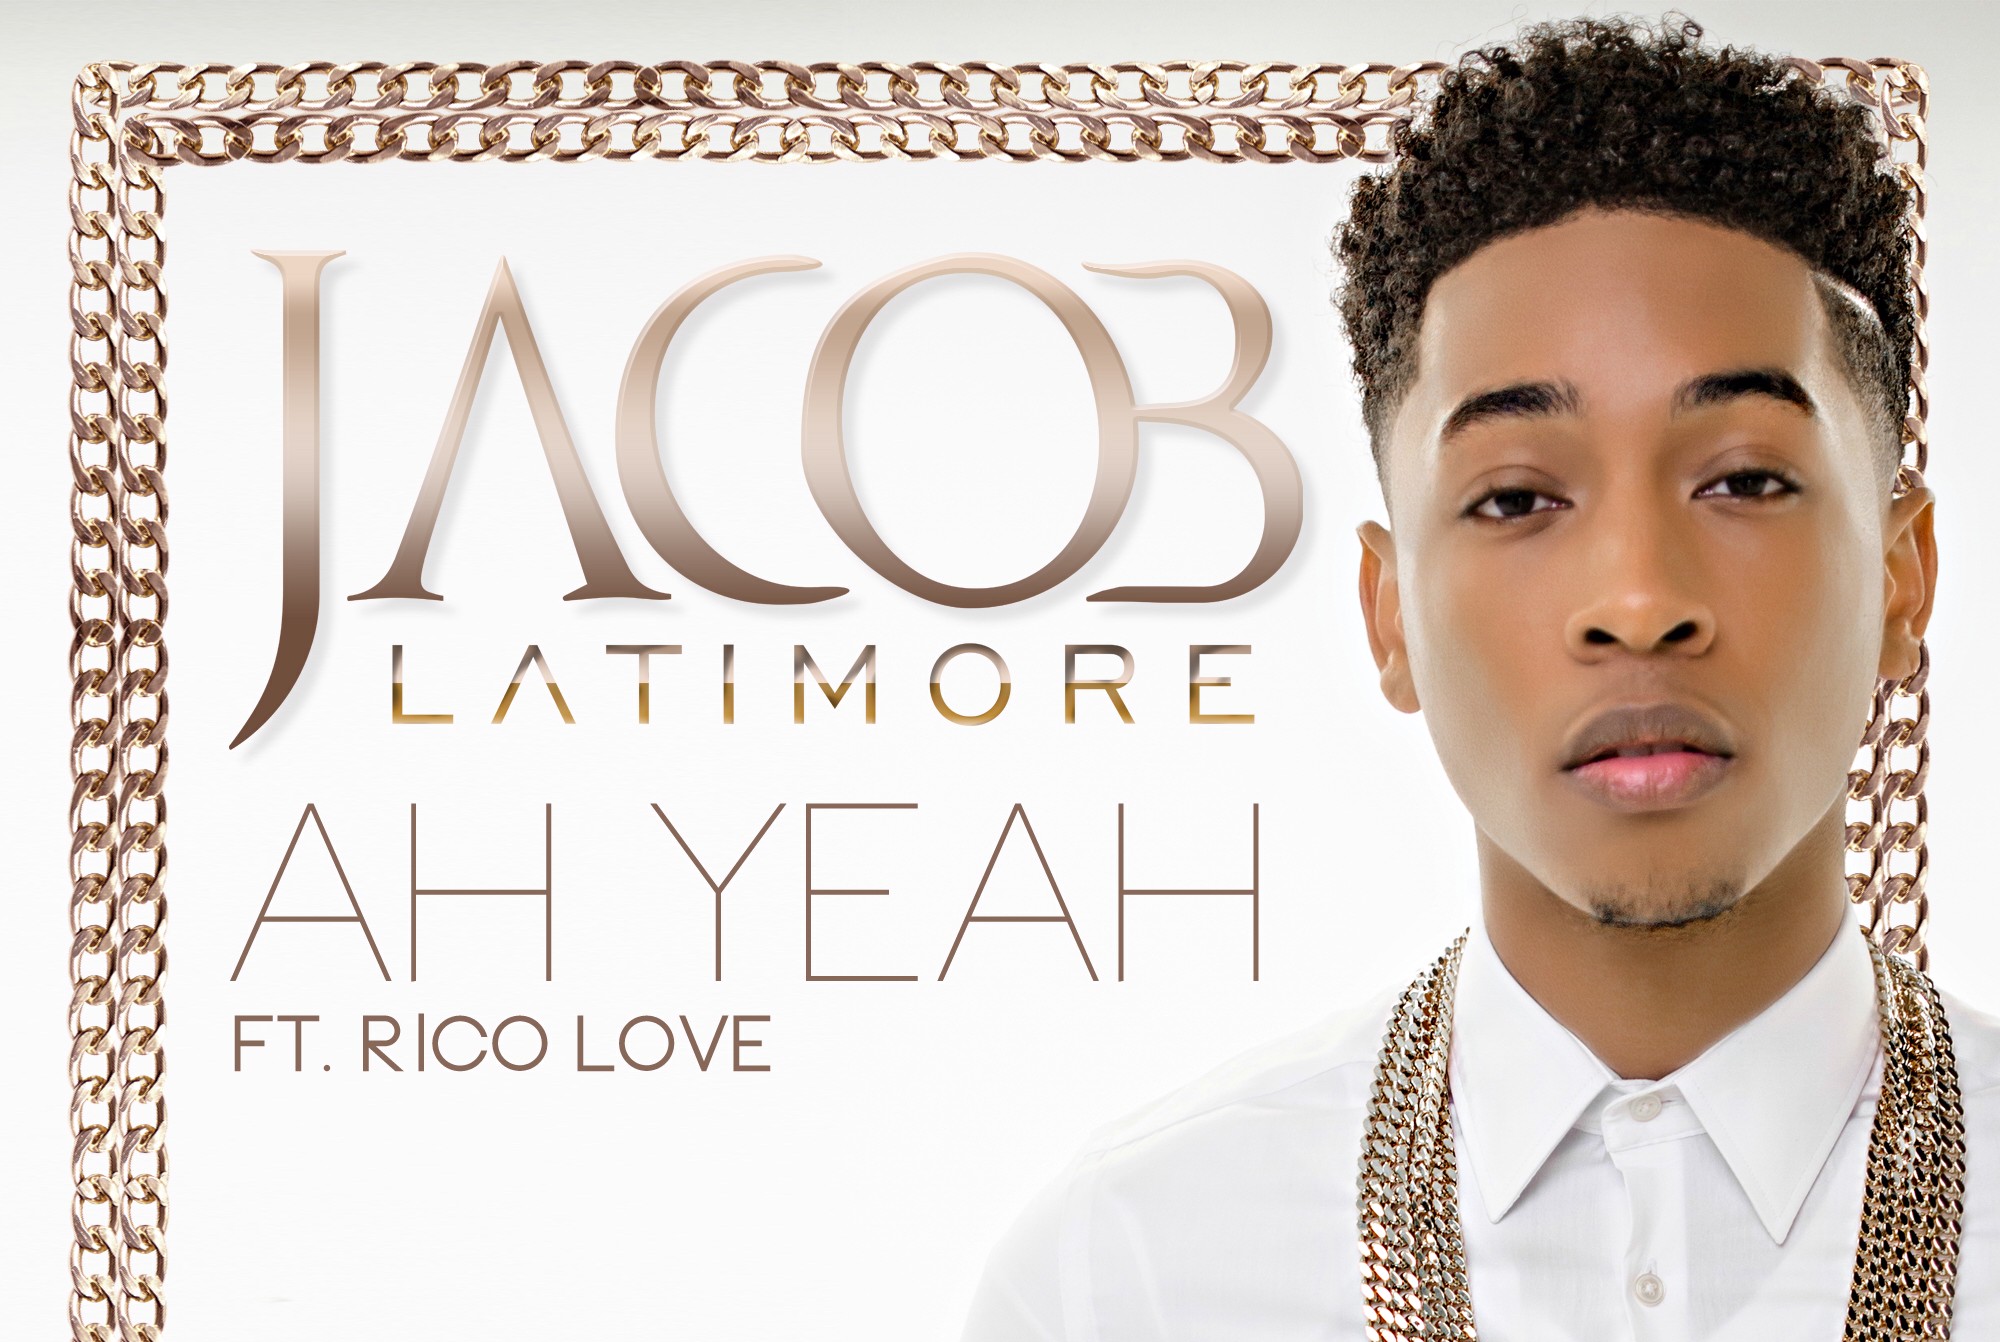 New Video: Jacob Latimore “Ah Yeah” featuring Rico Love